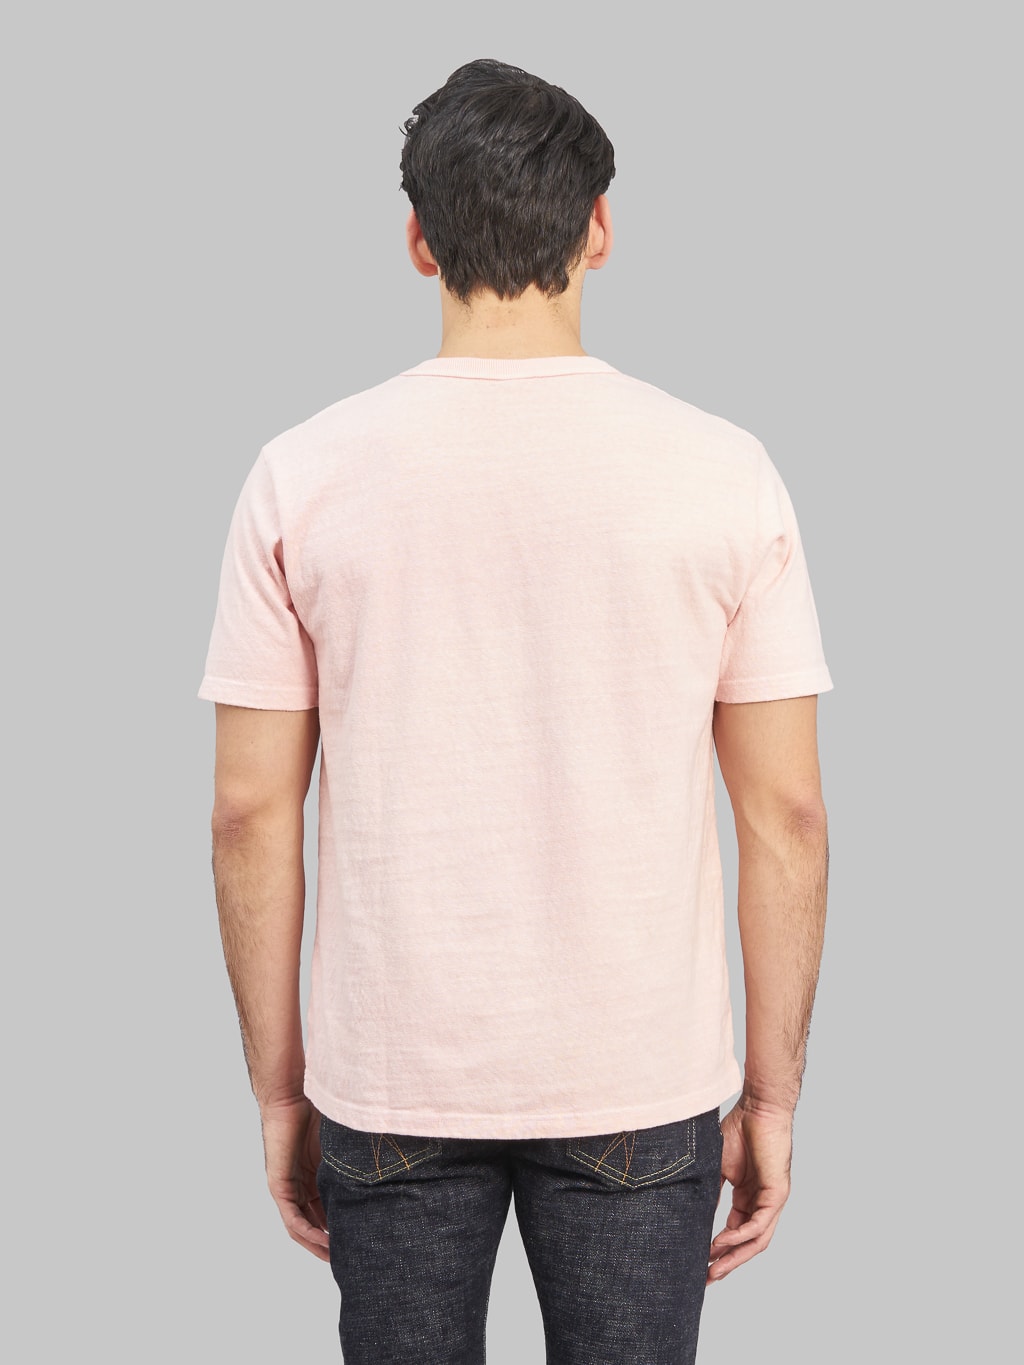 UES N8 Slub Nep Short Sleeve TShirt pink  back fit